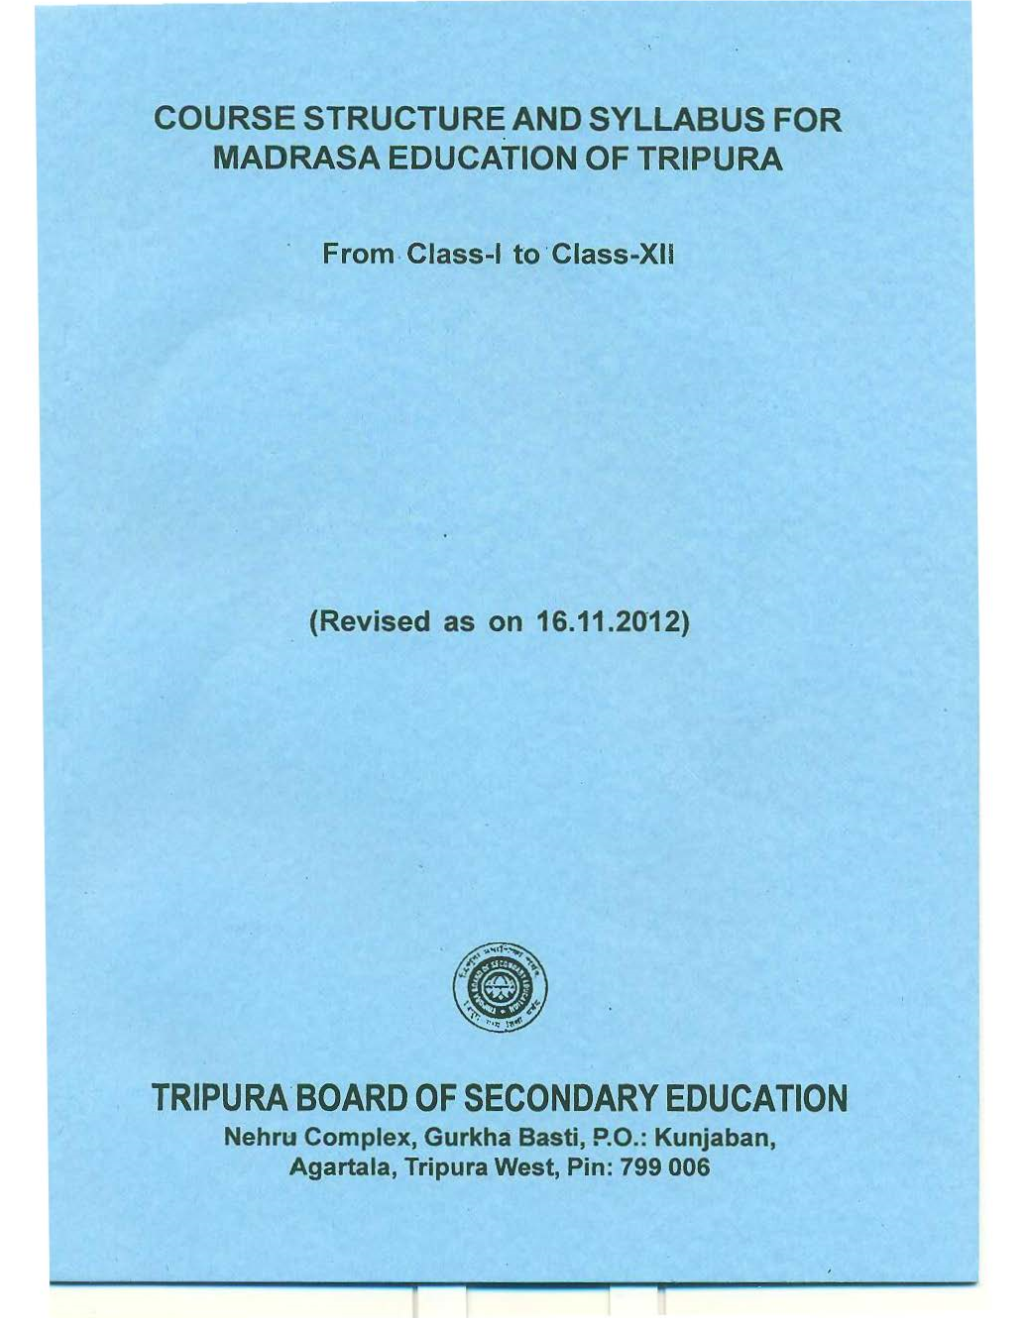 Syllabus for Madrasa Education